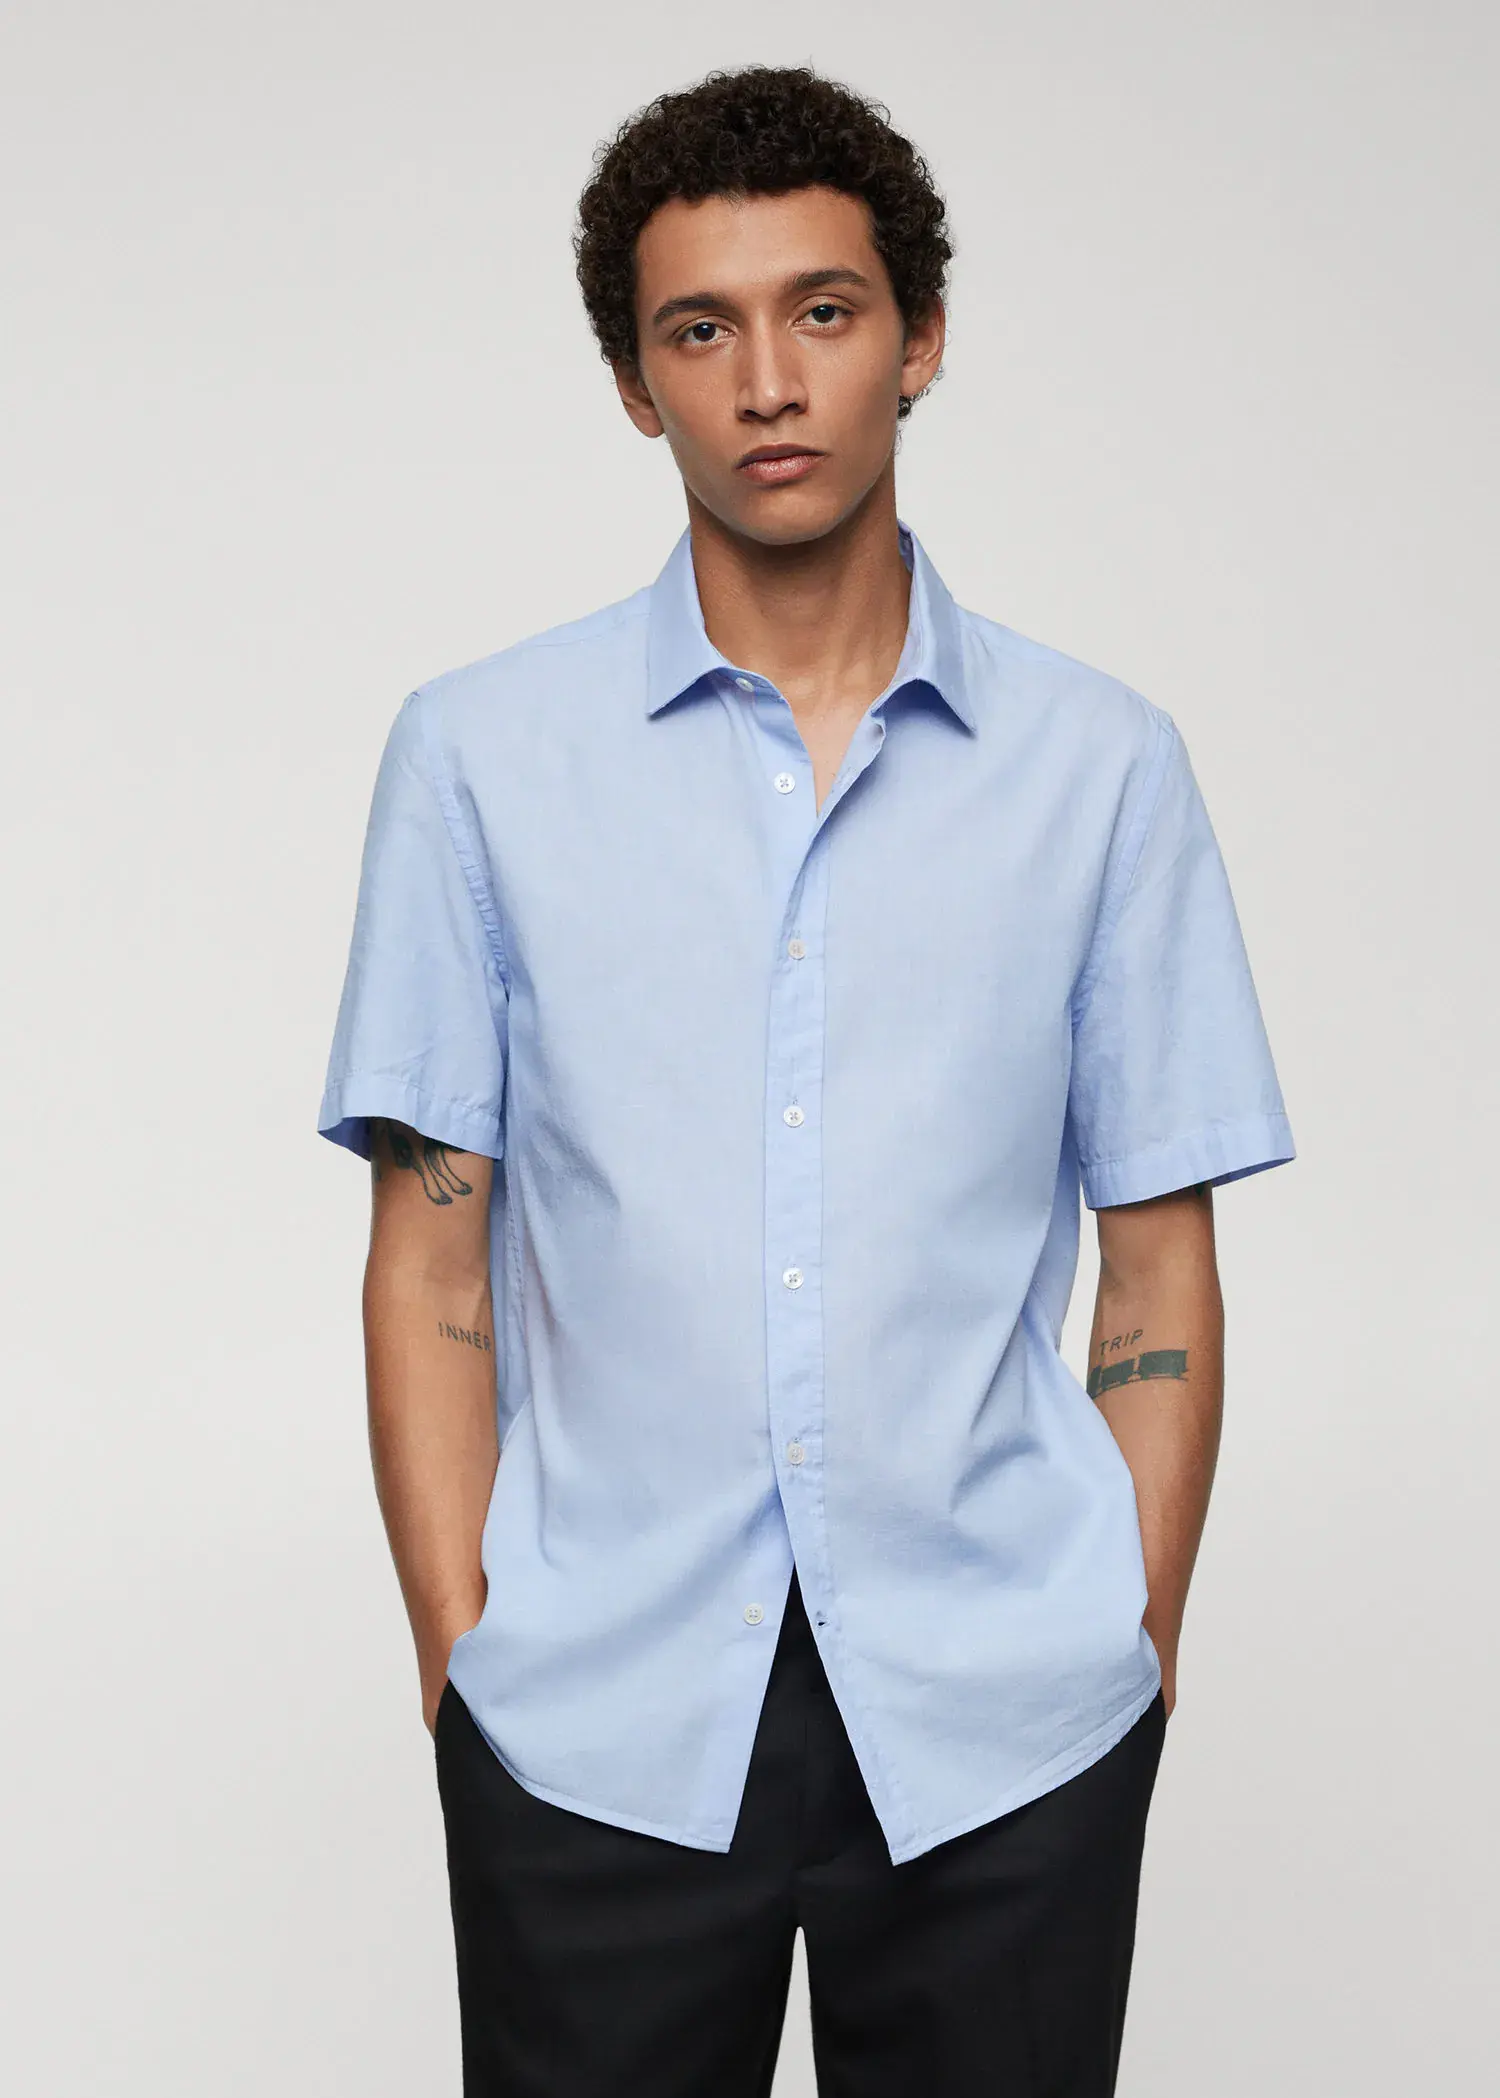 Mango 100% cotton short-sleeved shirt. 1